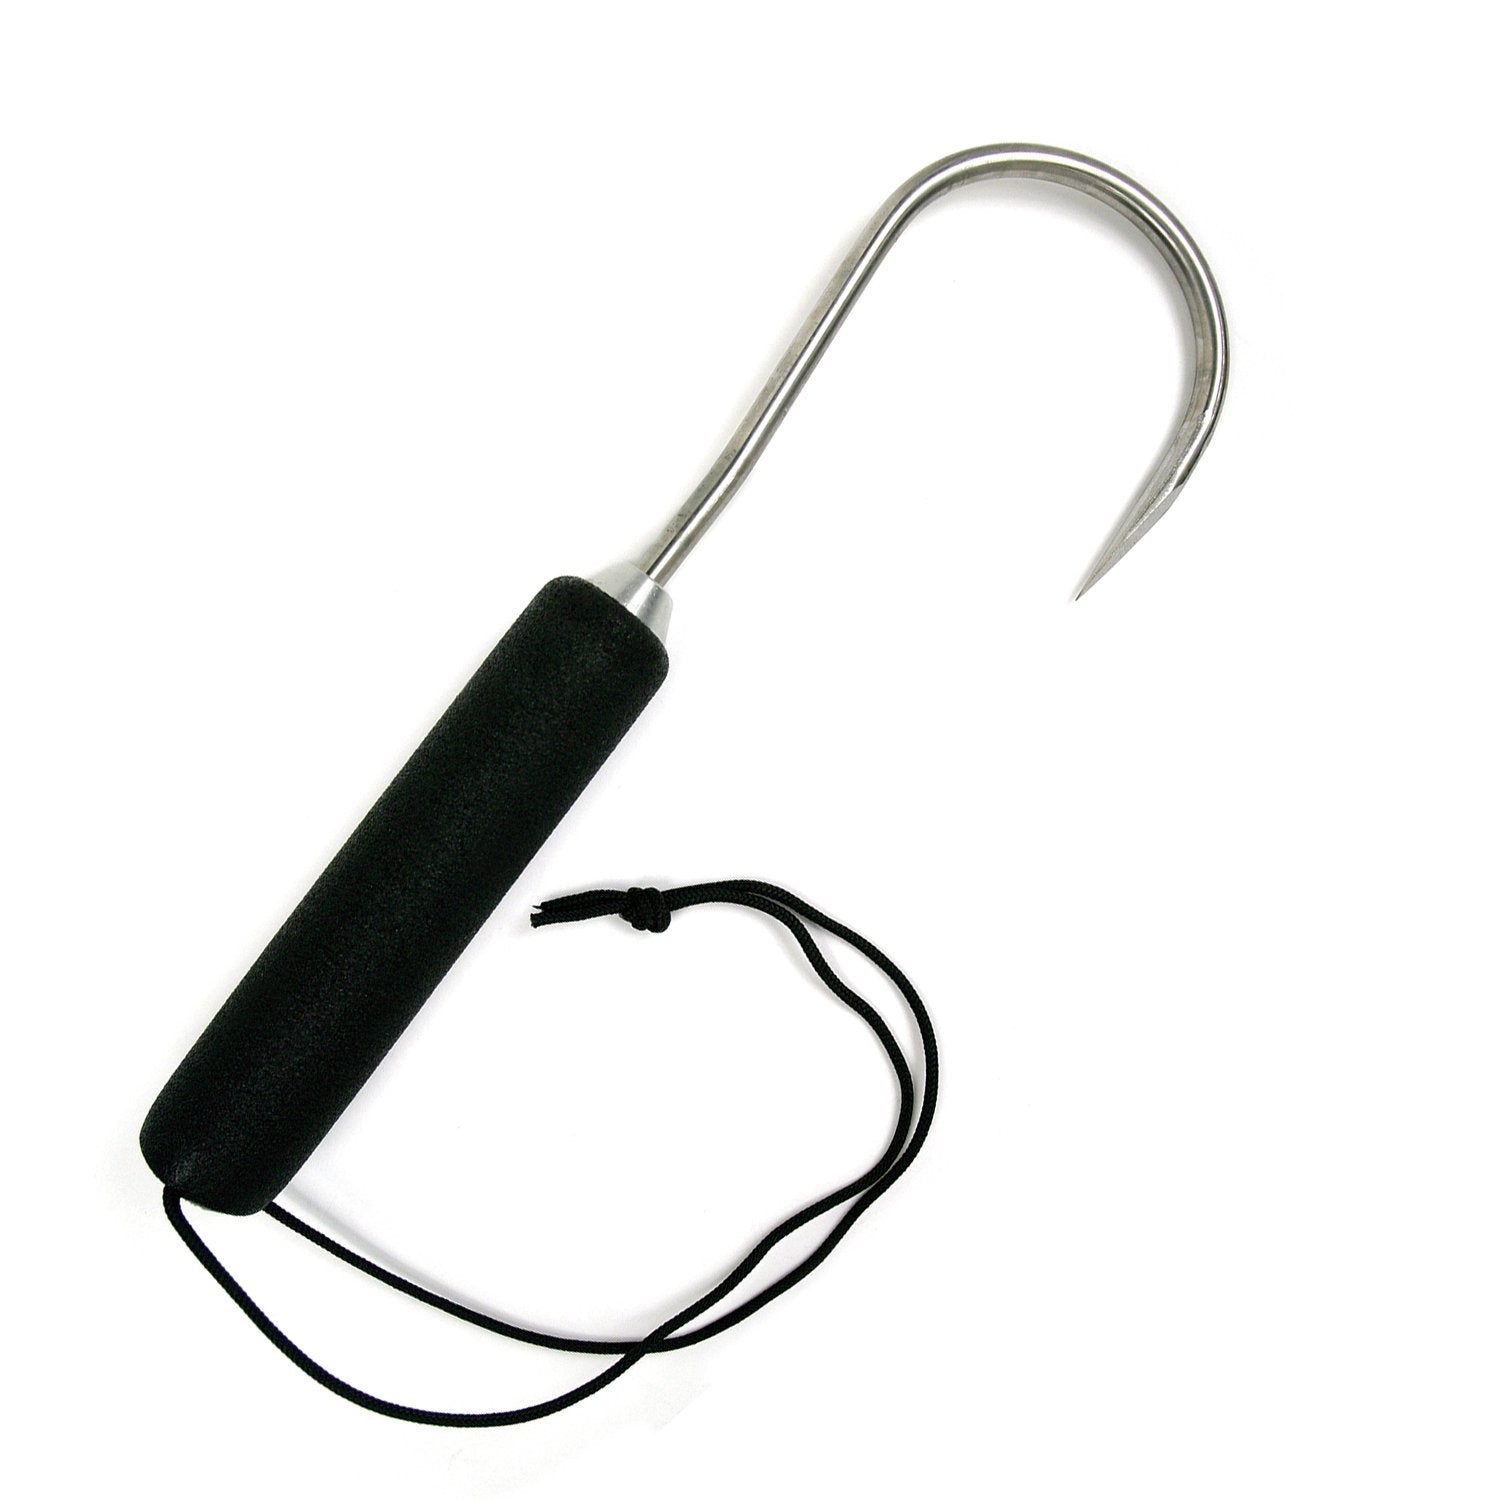 Fiblink Fishing Gaff with Stainless Steel Hook Fiberglass Pole Non-Slip  Grip Handle Hook Gaff (3' & 5' & 6', 66lb Test)